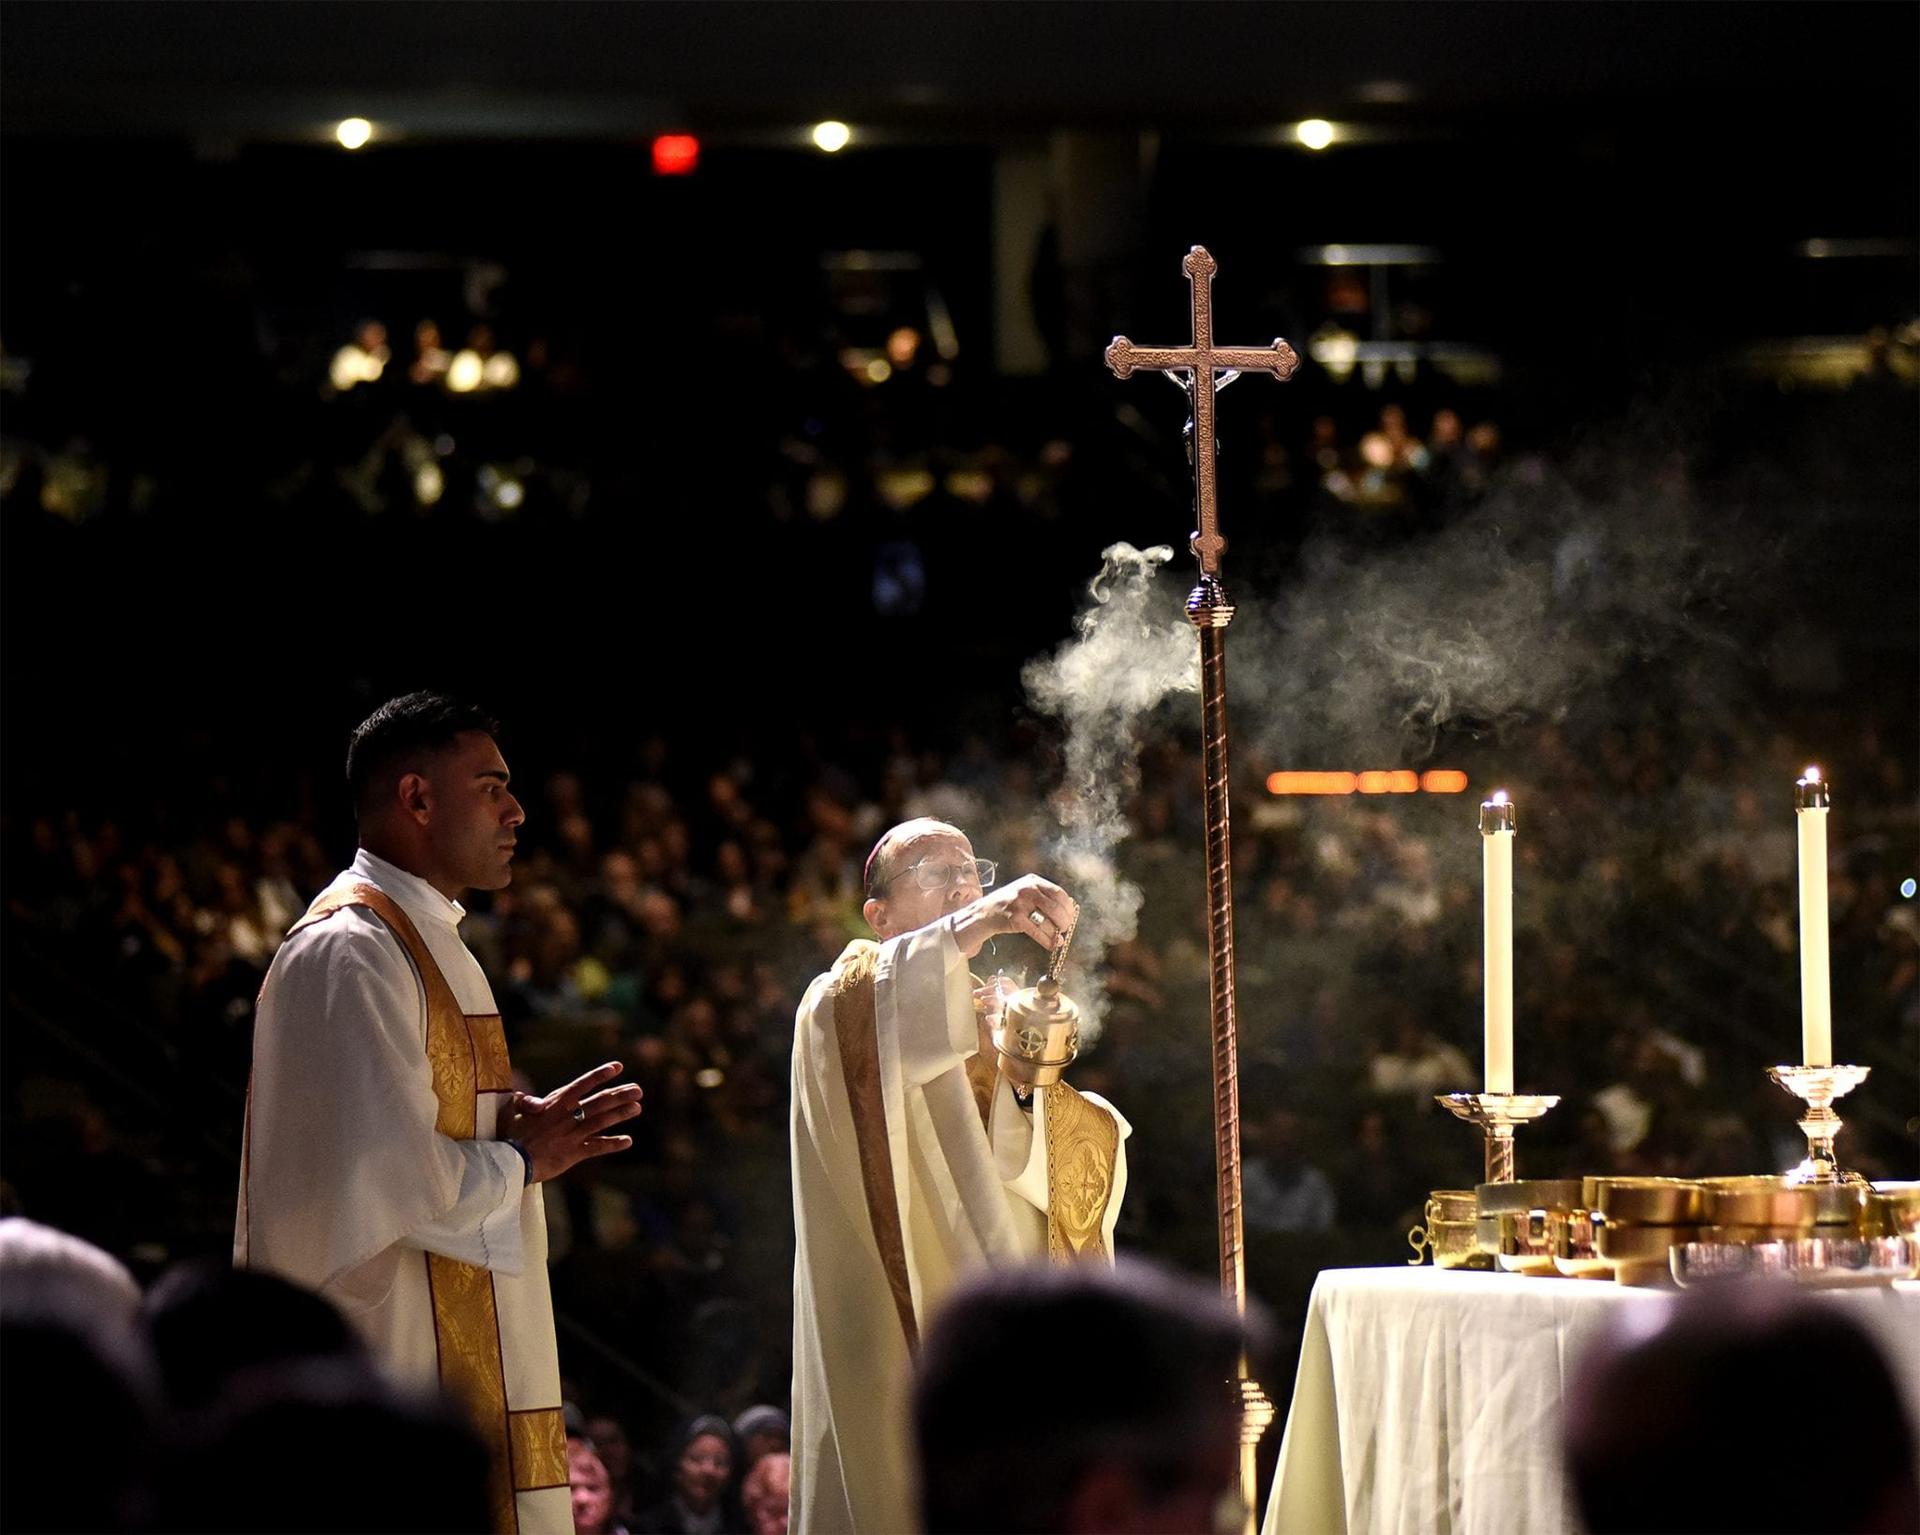 Every Catholic has duty to evangelize, archbishop tells Phoenix crowd